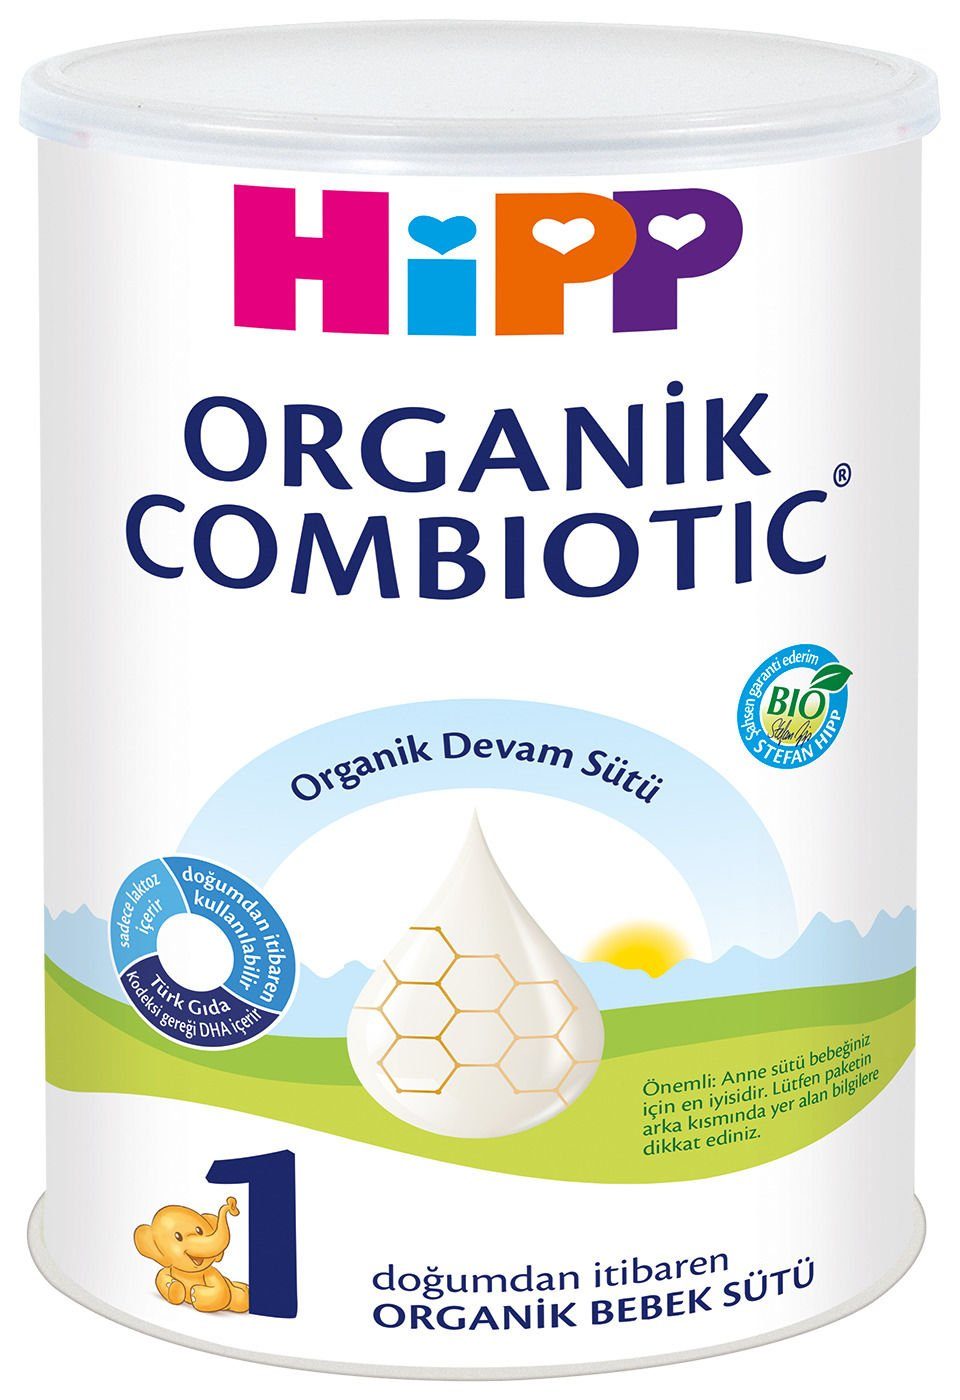 CLZ193  1 Organik Combiotic Bebek Sütü 350gr